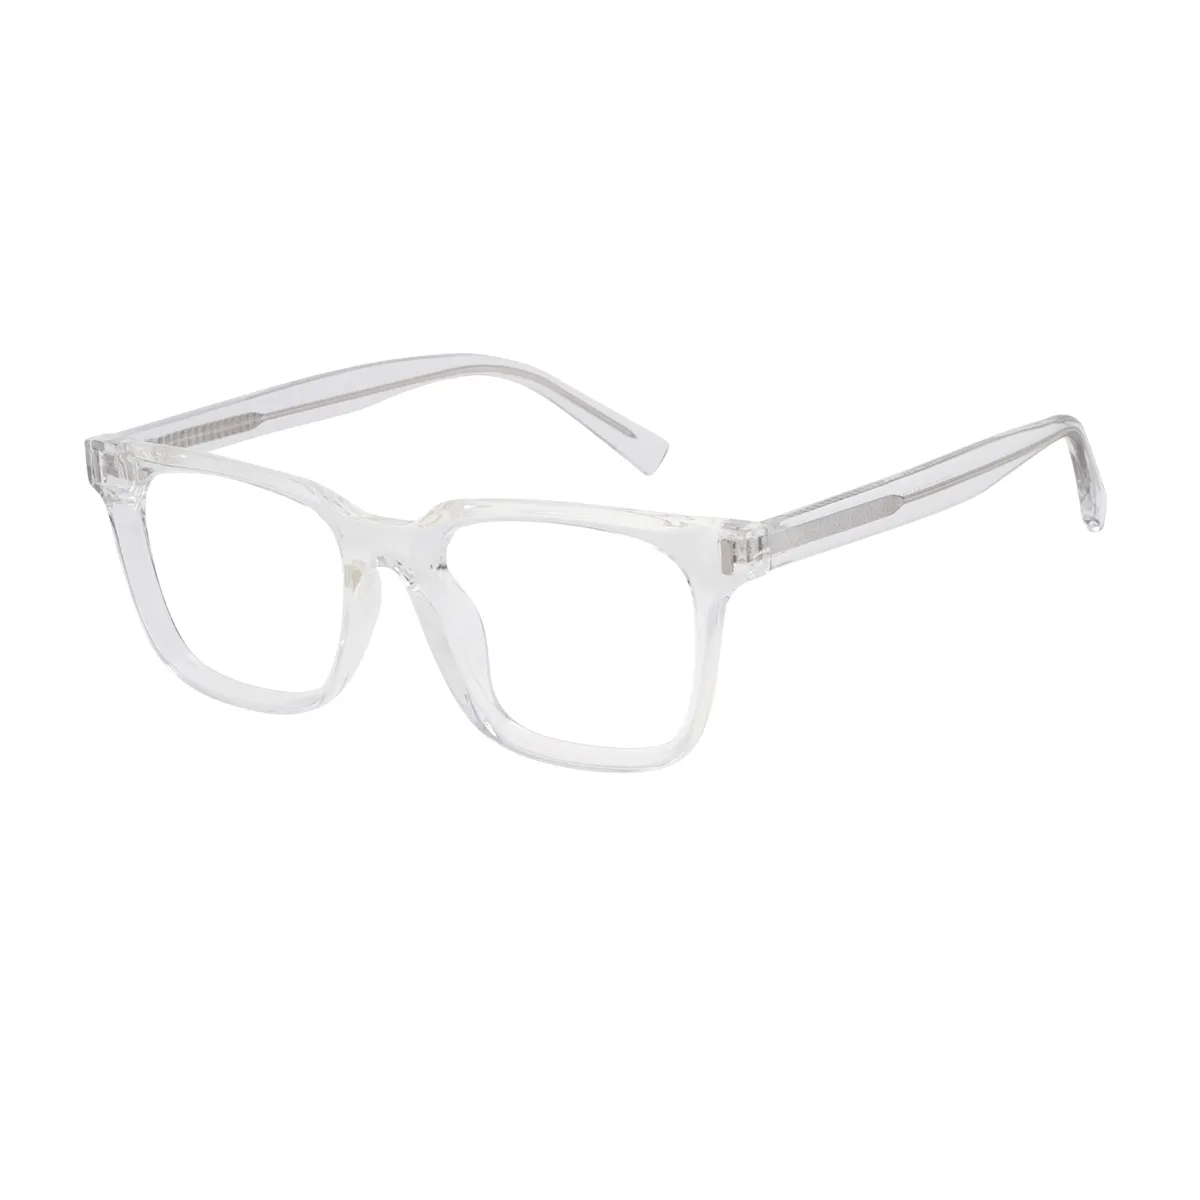 Albertine - Square Translucent Glasses for Men & Women